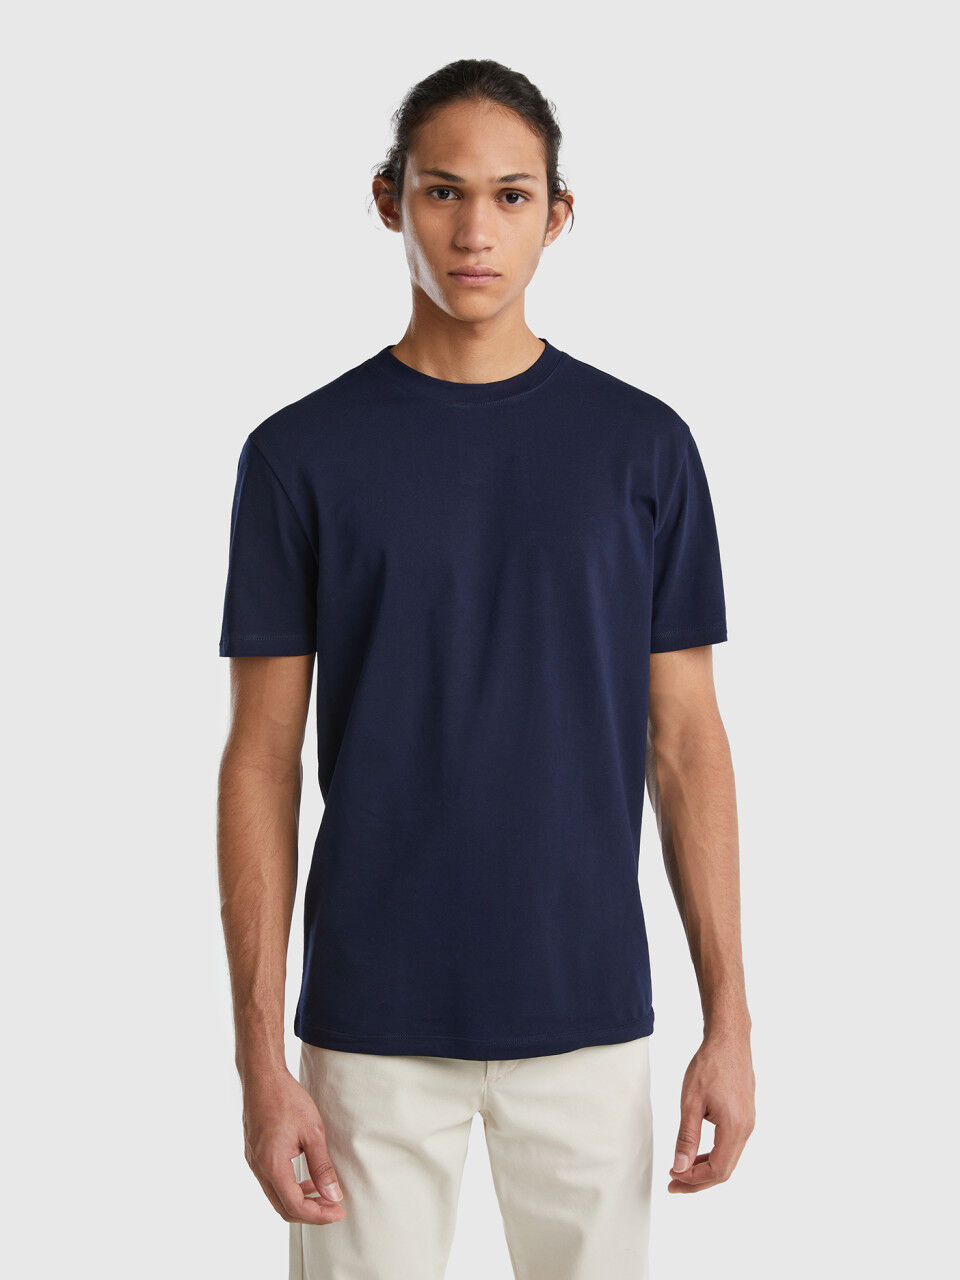 Slim Fit-T-Shirt in stretchiger Baumwolle